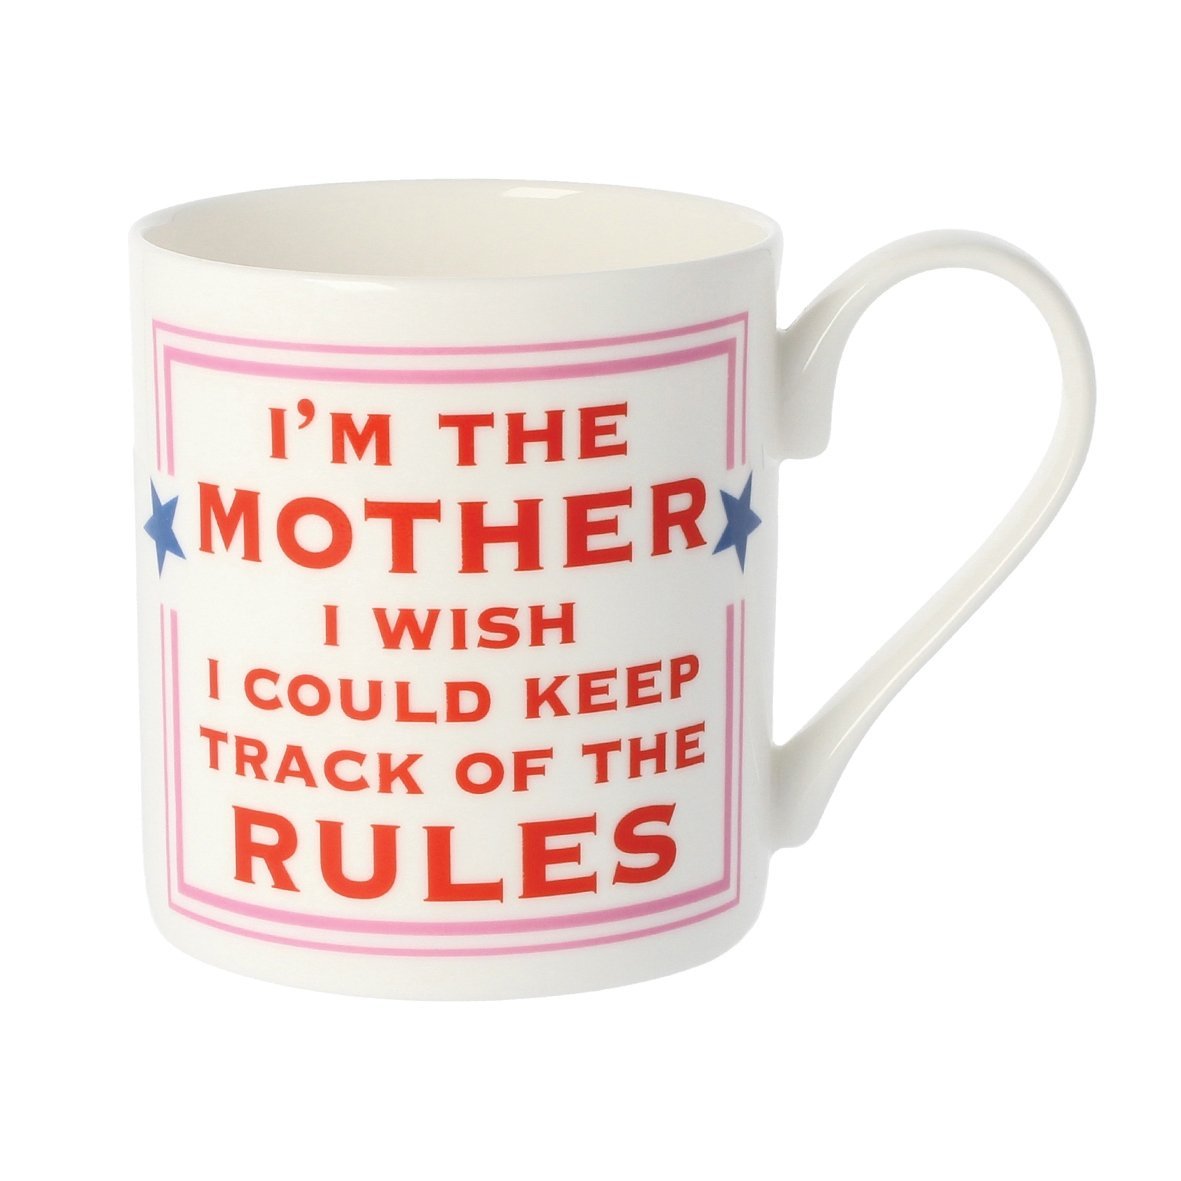 I'm The Mother Mug by Cammy Thomson